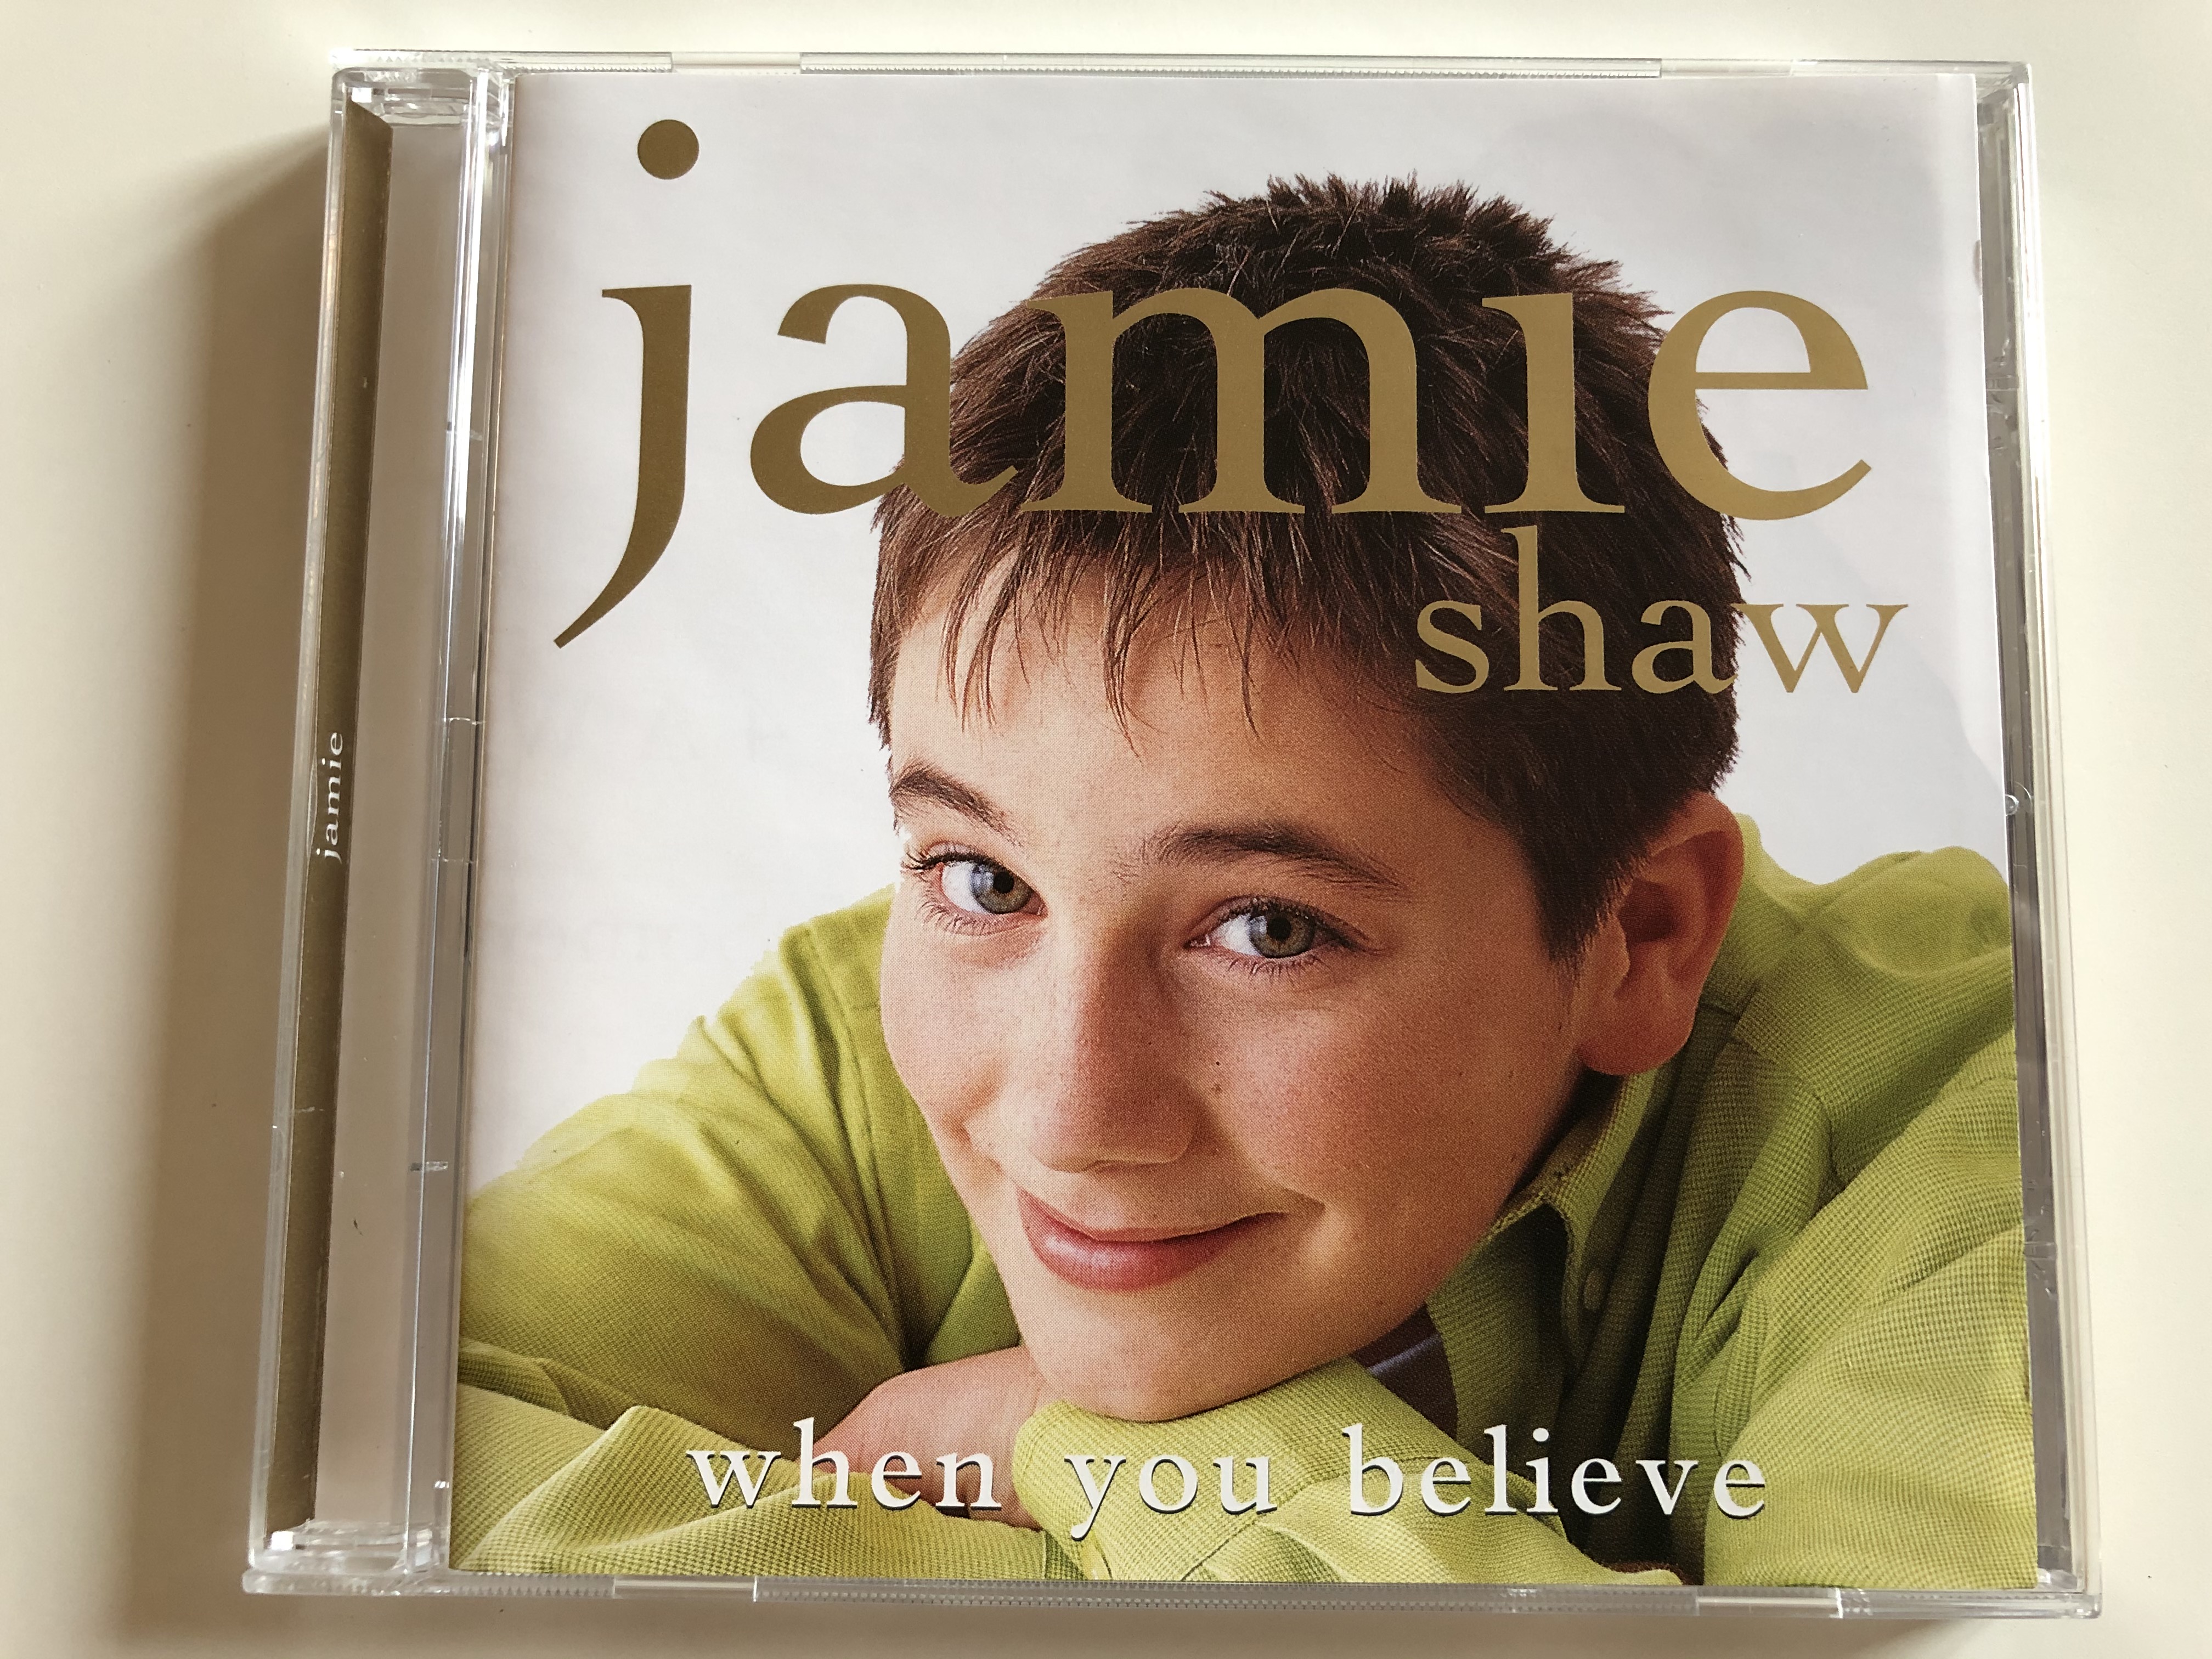 jamie-shaw-when-you-believe-decca-audio-cd-1999-stereo-466-568-2-1-.jpg